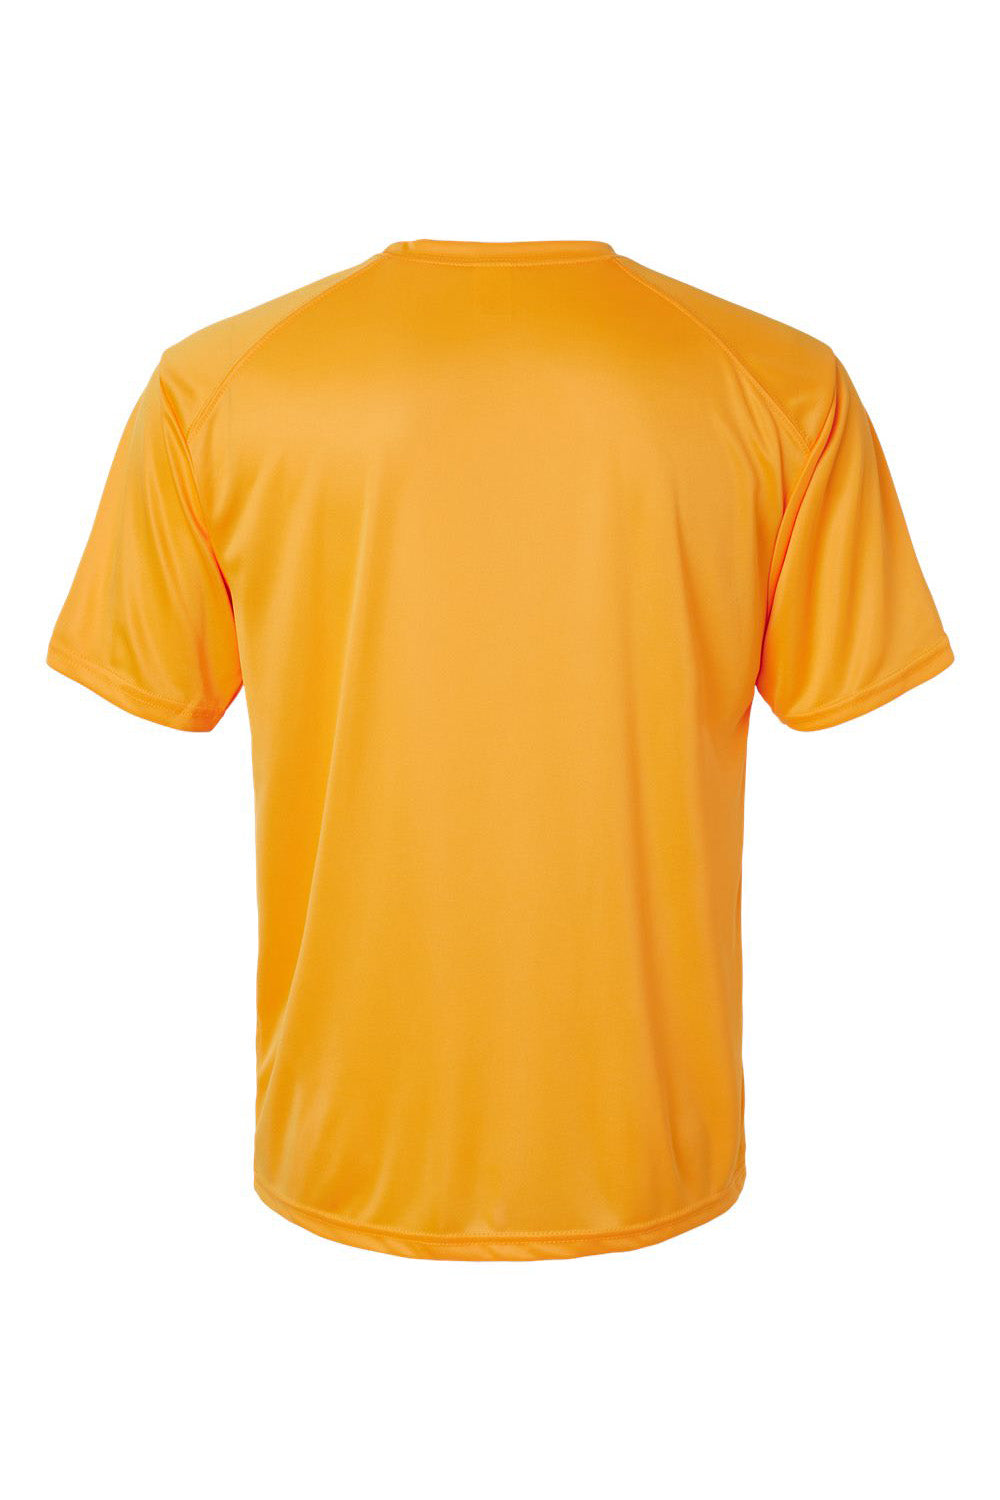 Paragon 200 Mens Islander Performance Short Sleeve Crewneck T-Shirt Gold Flat Back